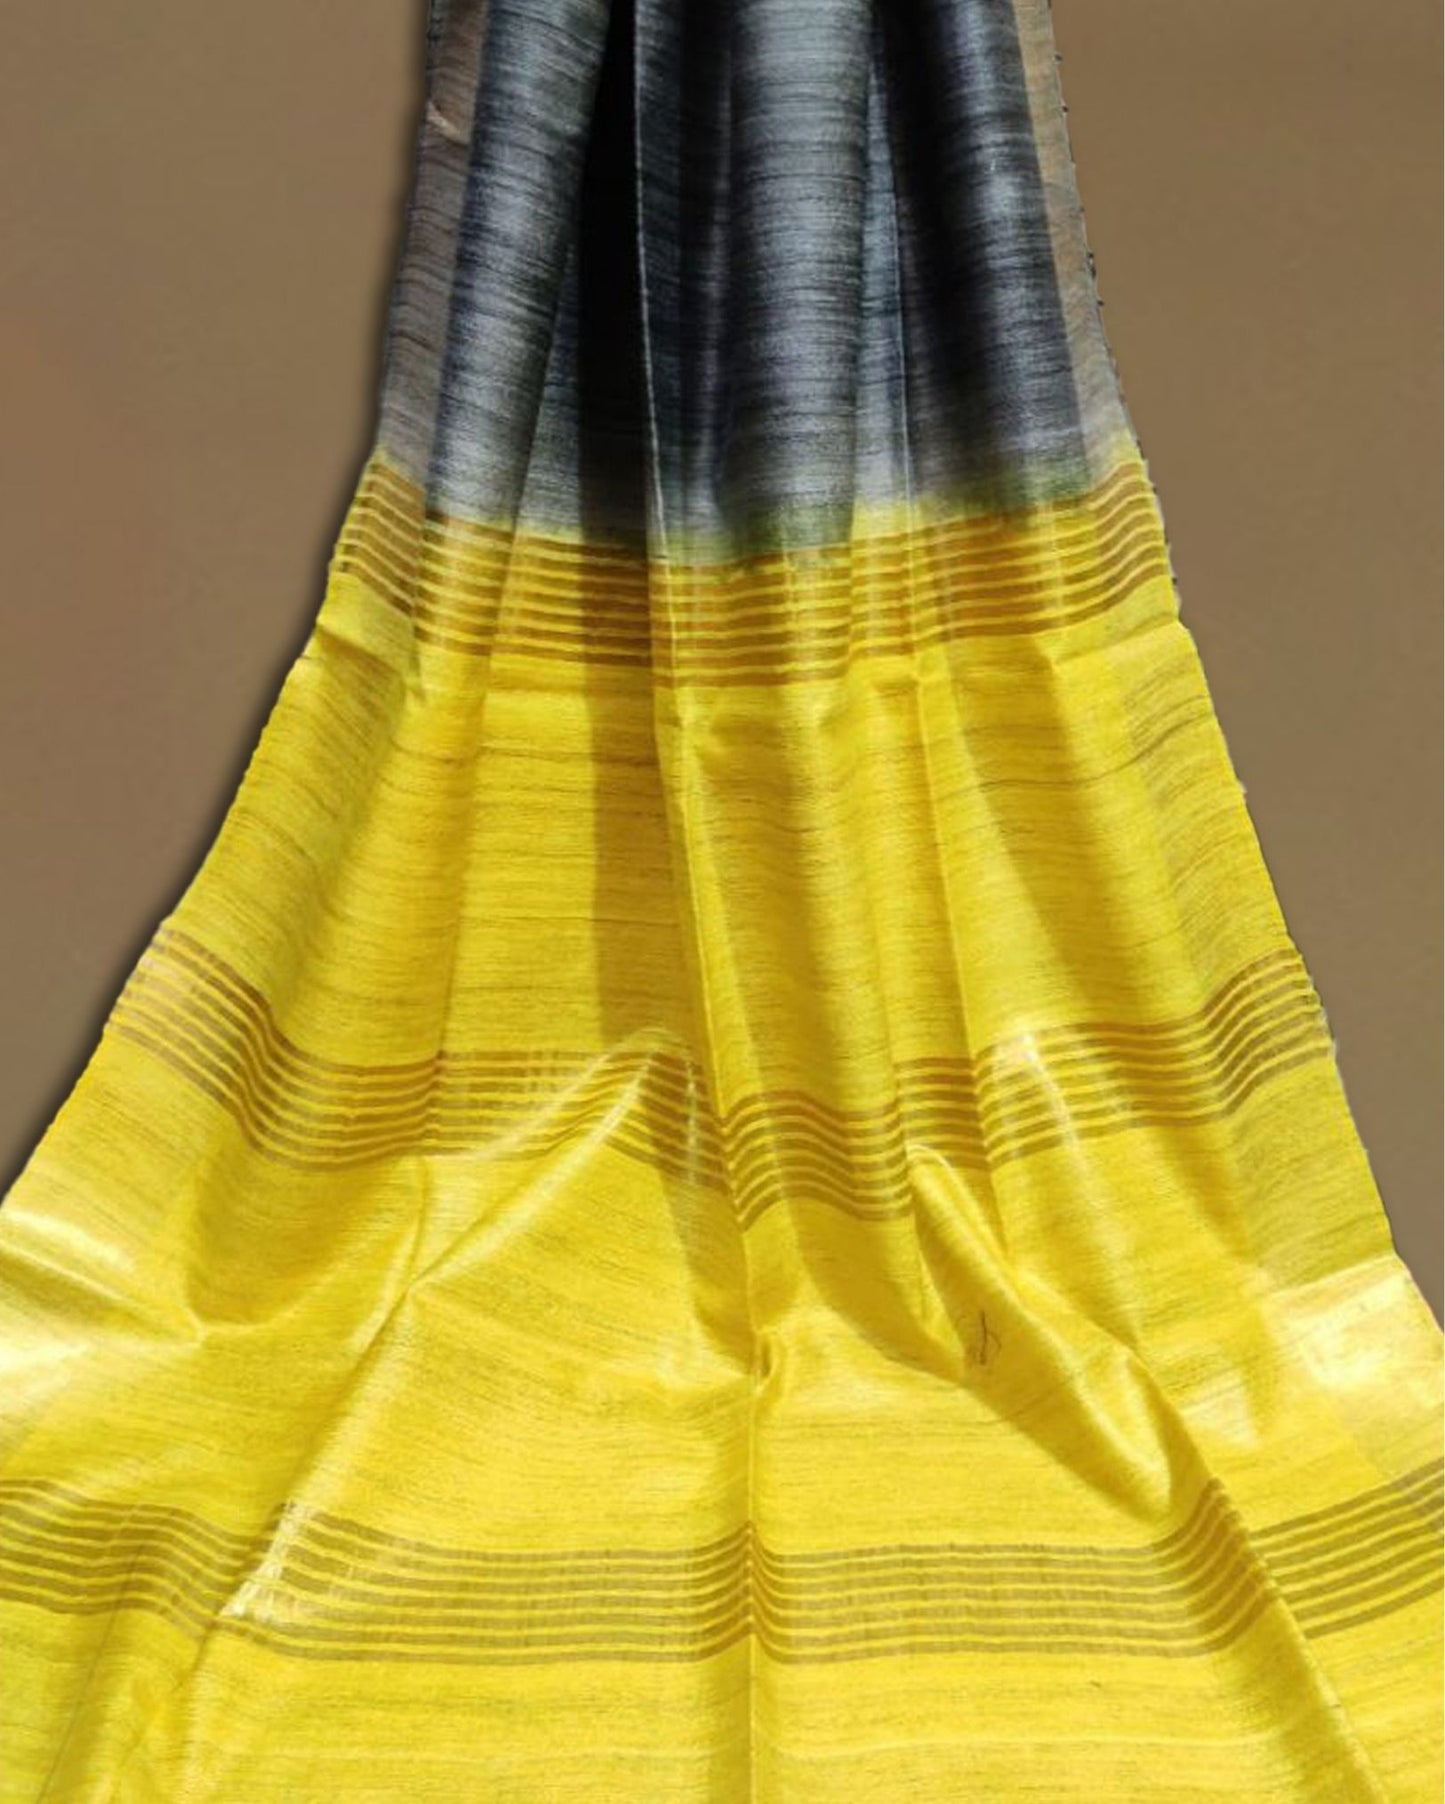 Silkmark Ghicha Tussar Scintillating Black & Yellow Saree